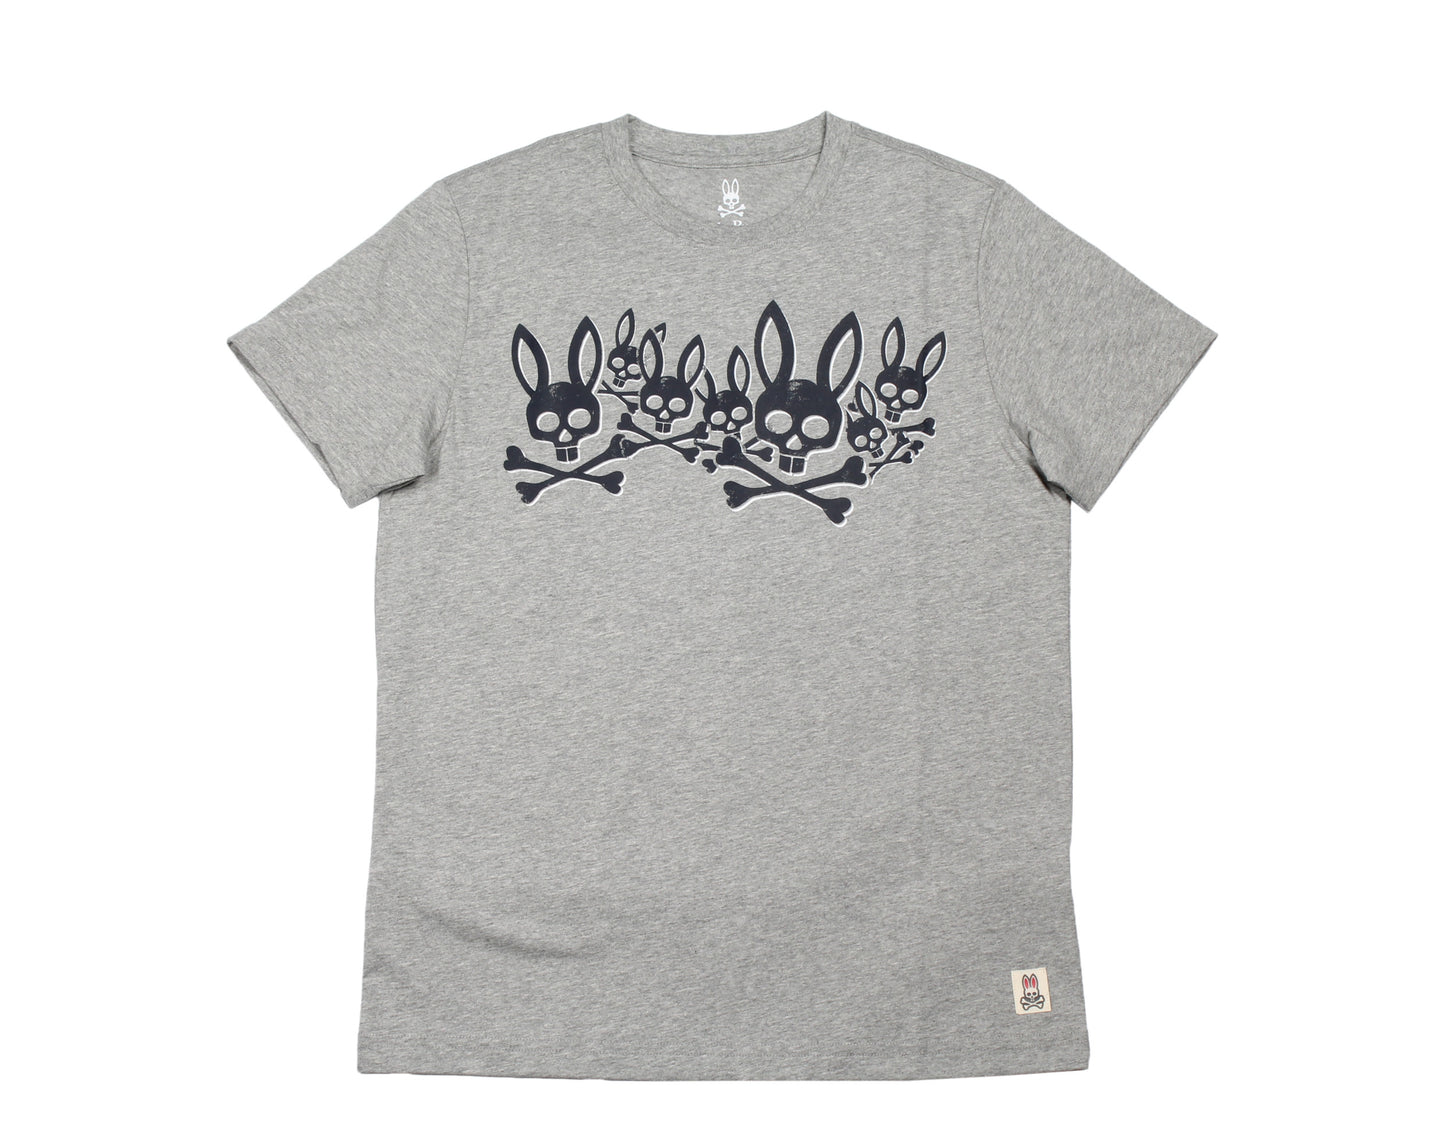 Psycho Bunny Printed Graphic Heather Grey Men's Tee Shirt B6U623F1PC-HGY